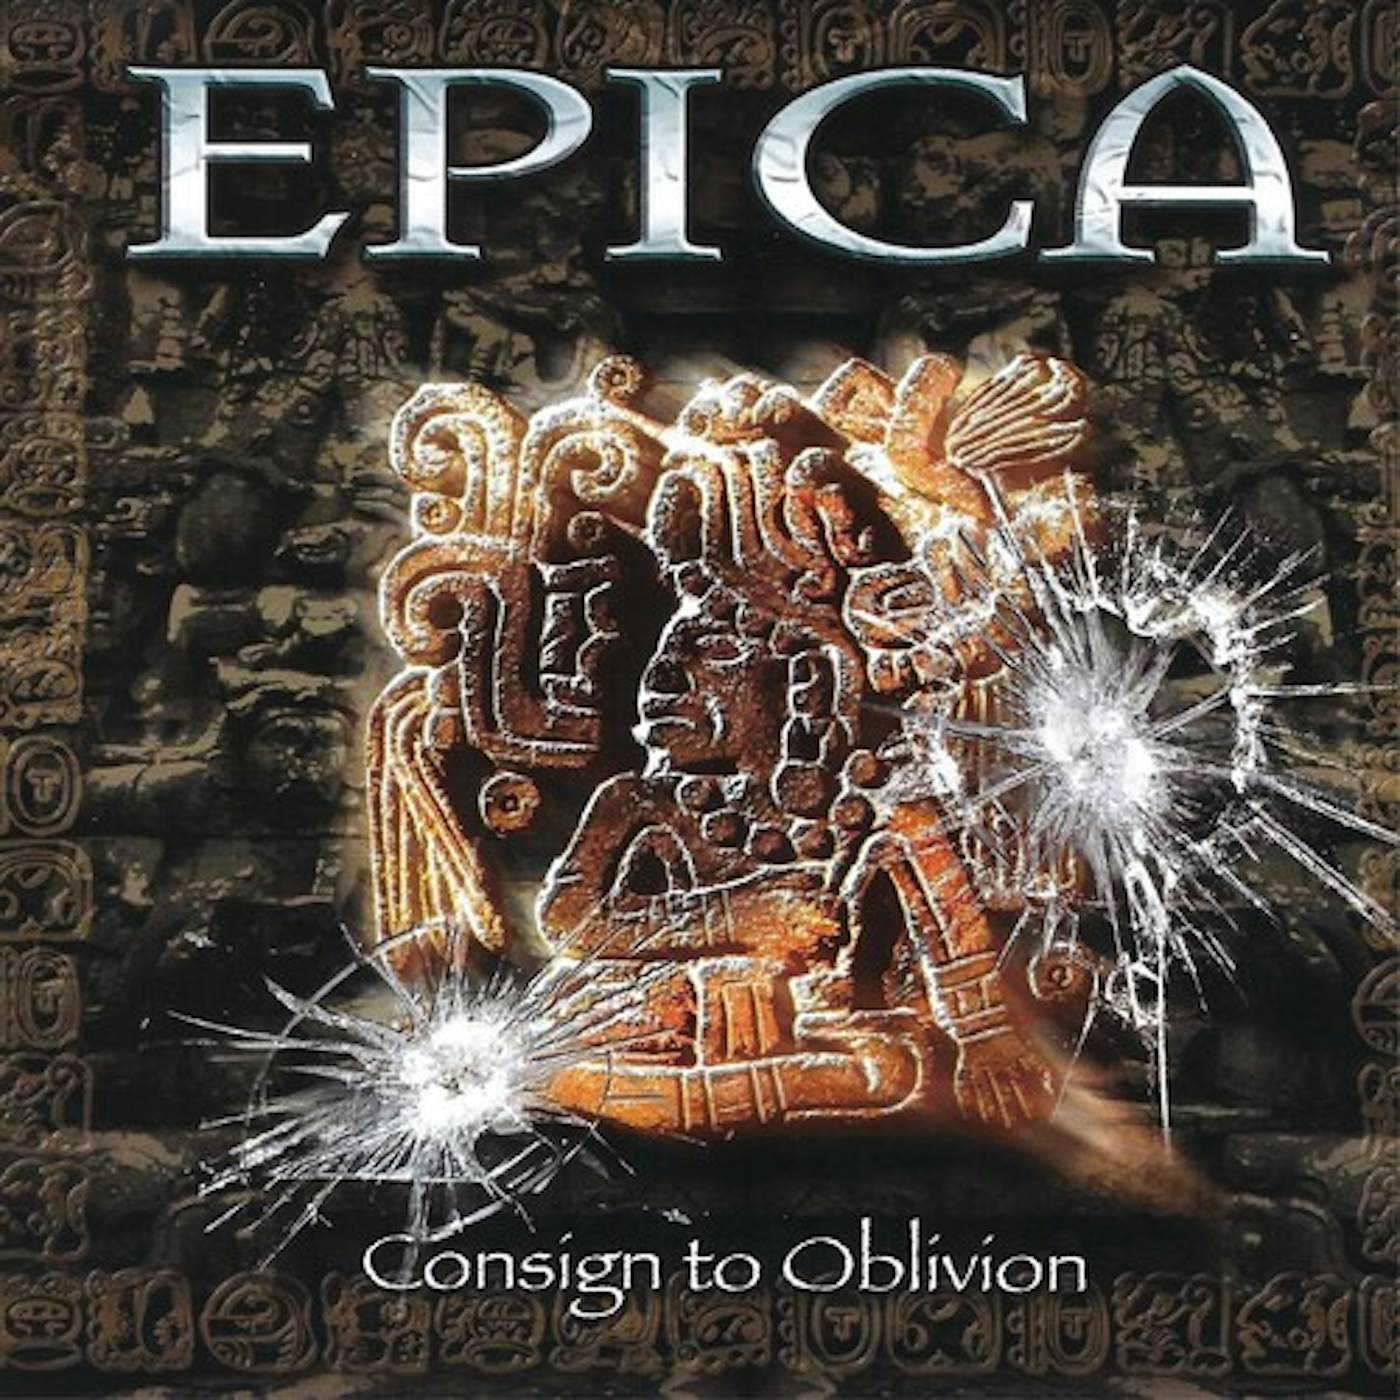 Epica CONSIGN TO OBLIVION Vinyl Record